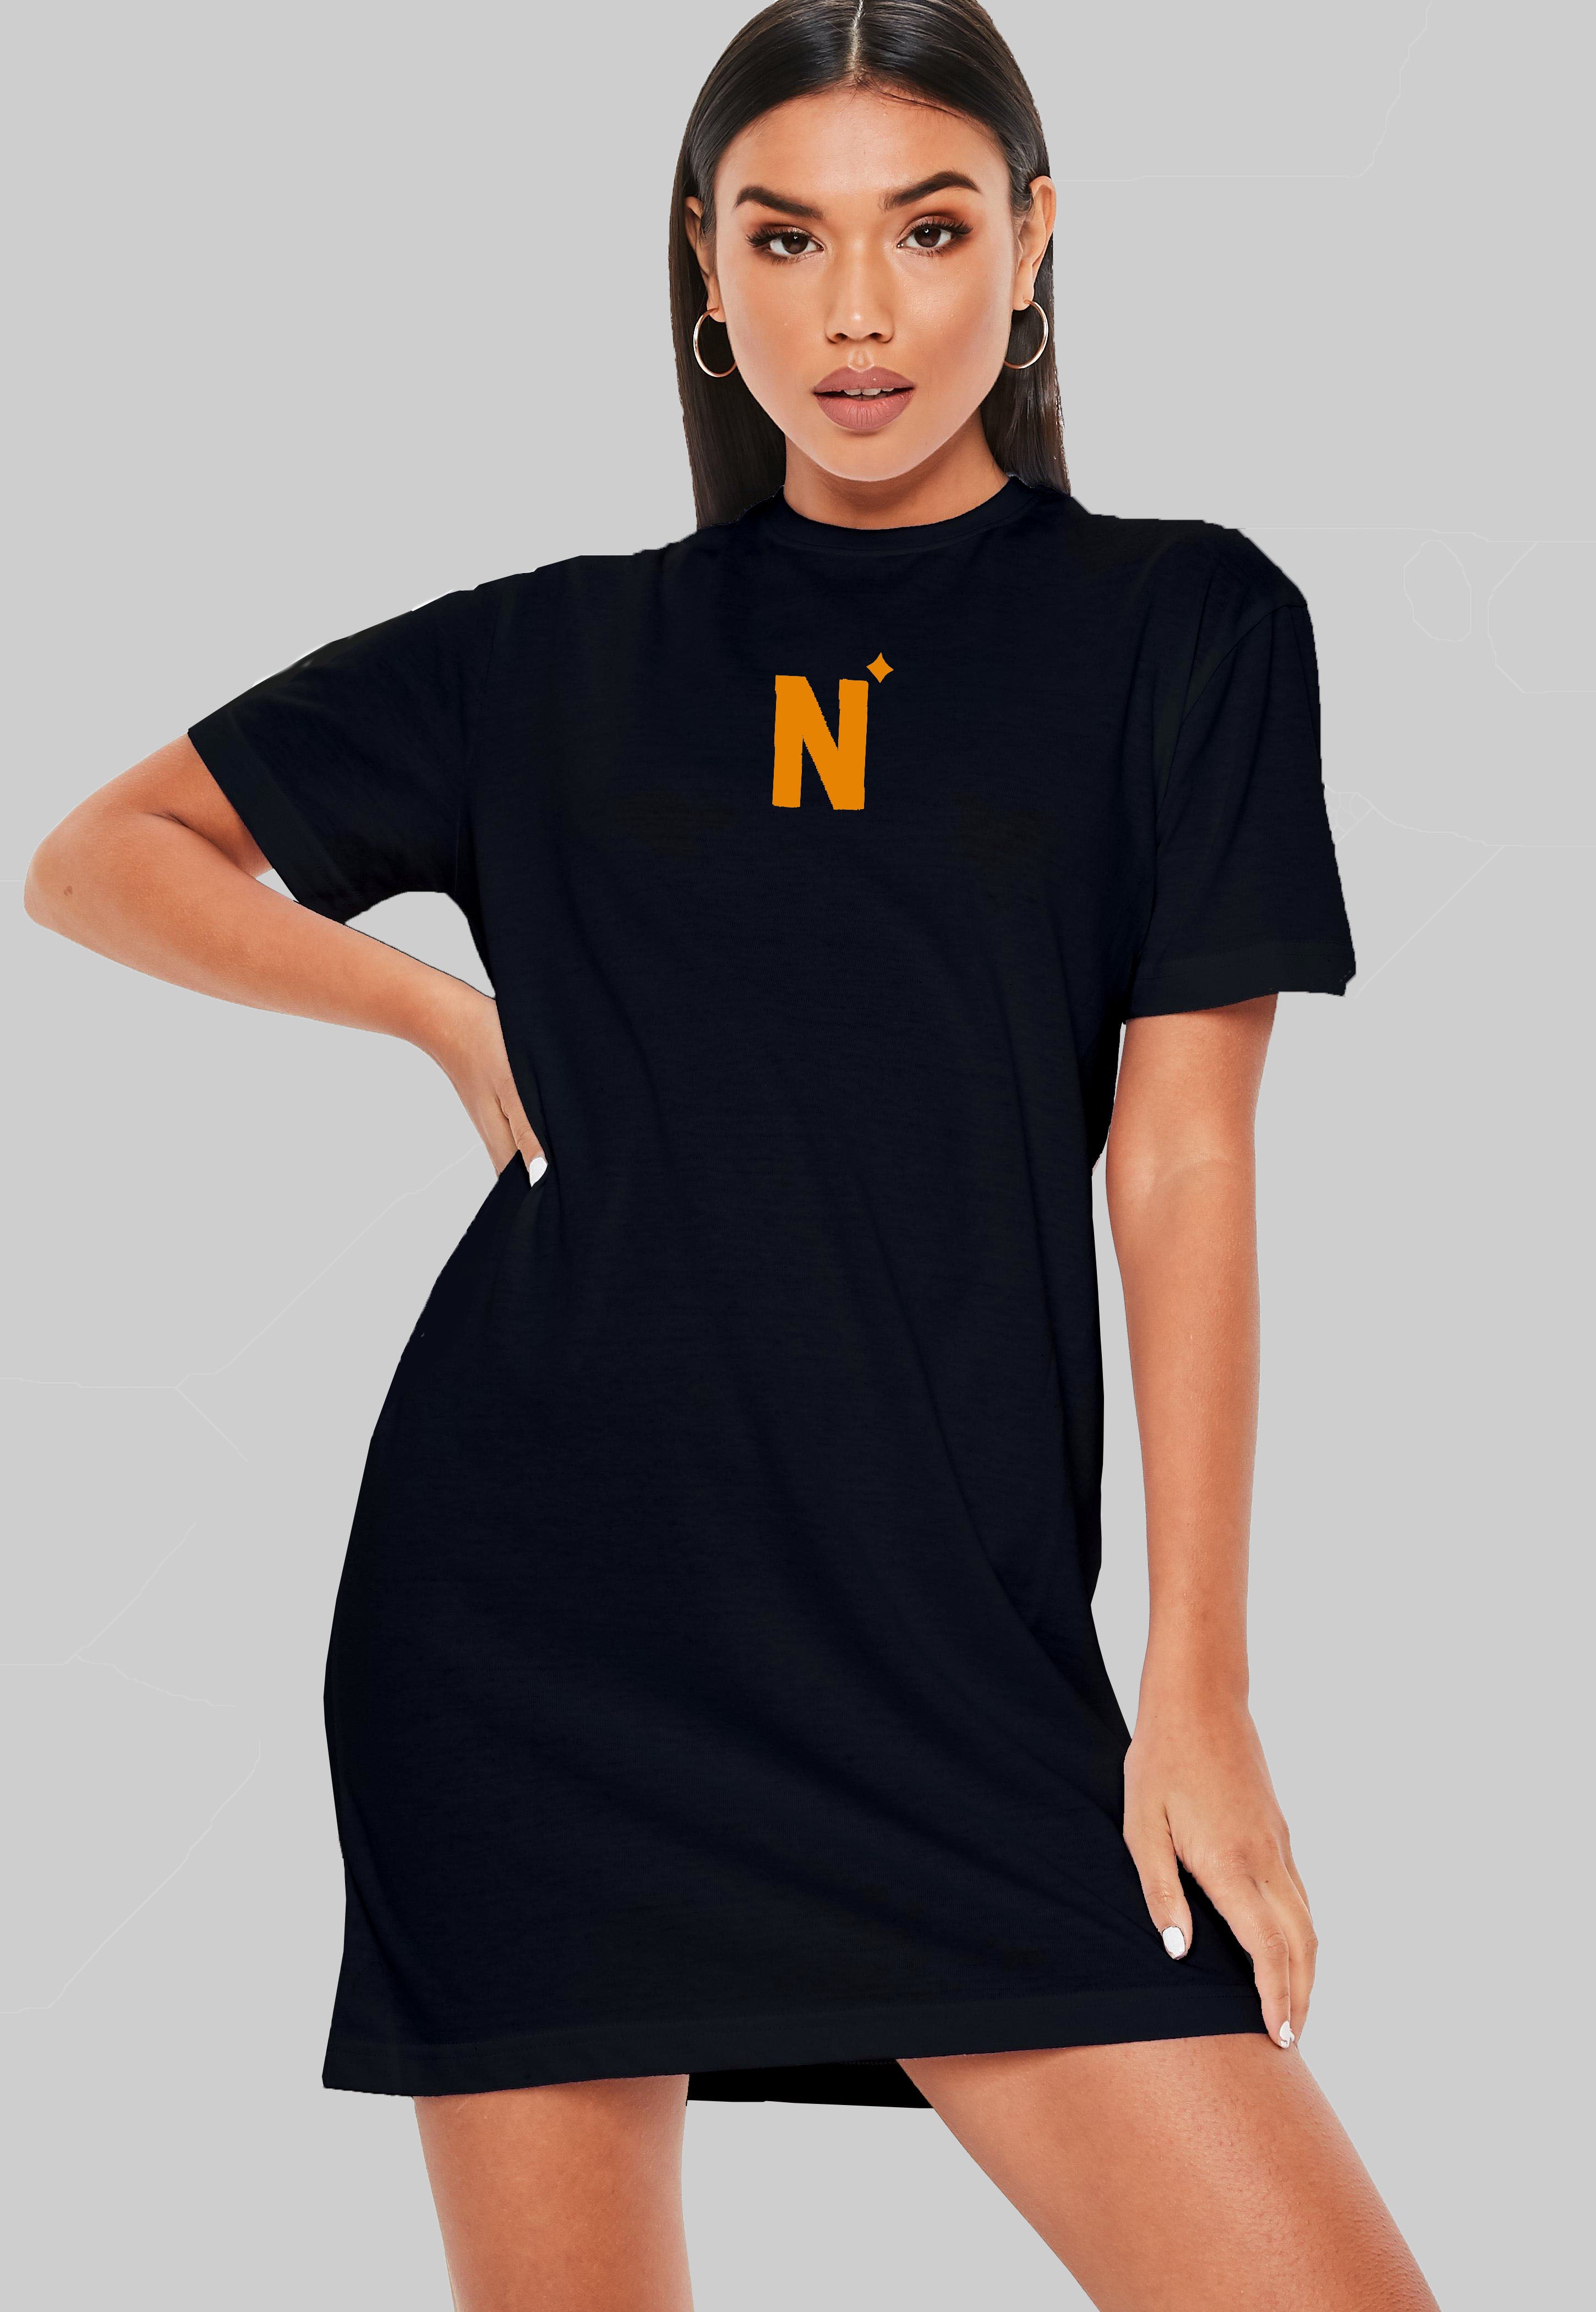 N T-Shirt Dress